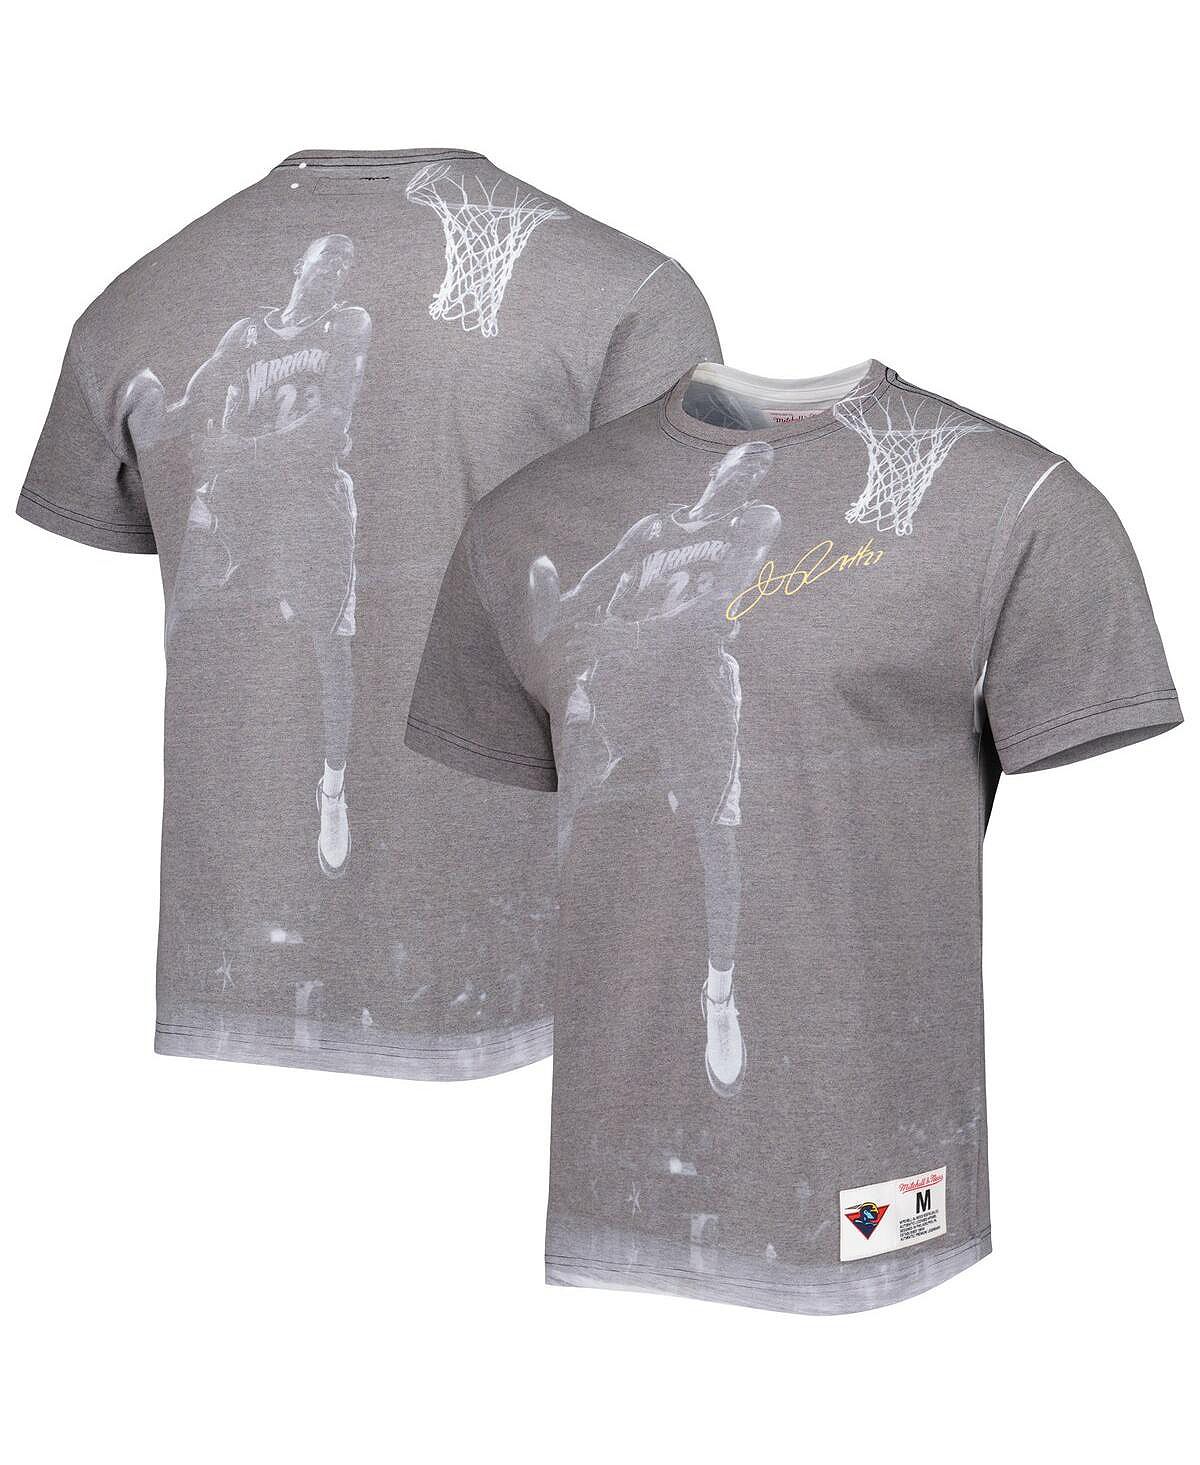 Мужская футболка jason richardson grey golden state warriors above the rim с сублимацией Mitchell & Ness, серый скумпия кожевенная голден леди